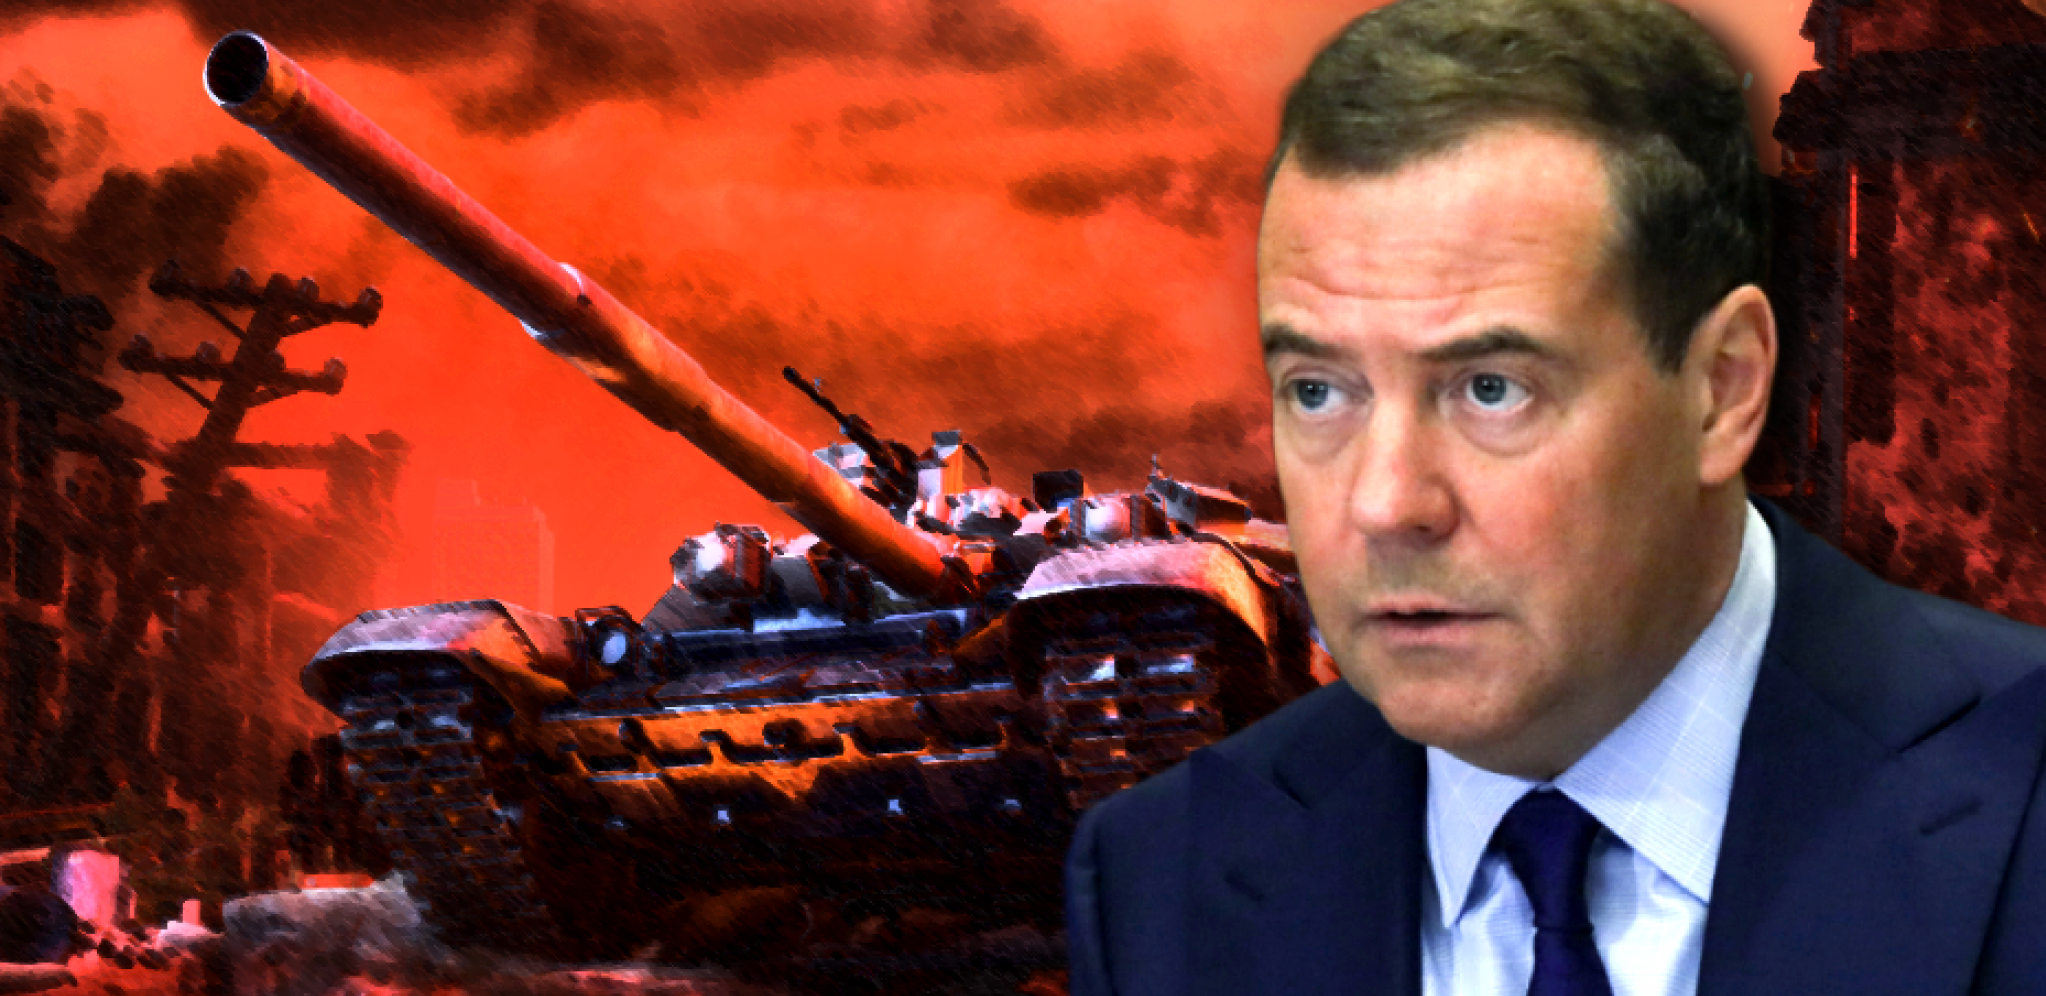 OVO JE KRAJ AMERIKE! Medvedev: Svet je na ivici novog svetskog rata